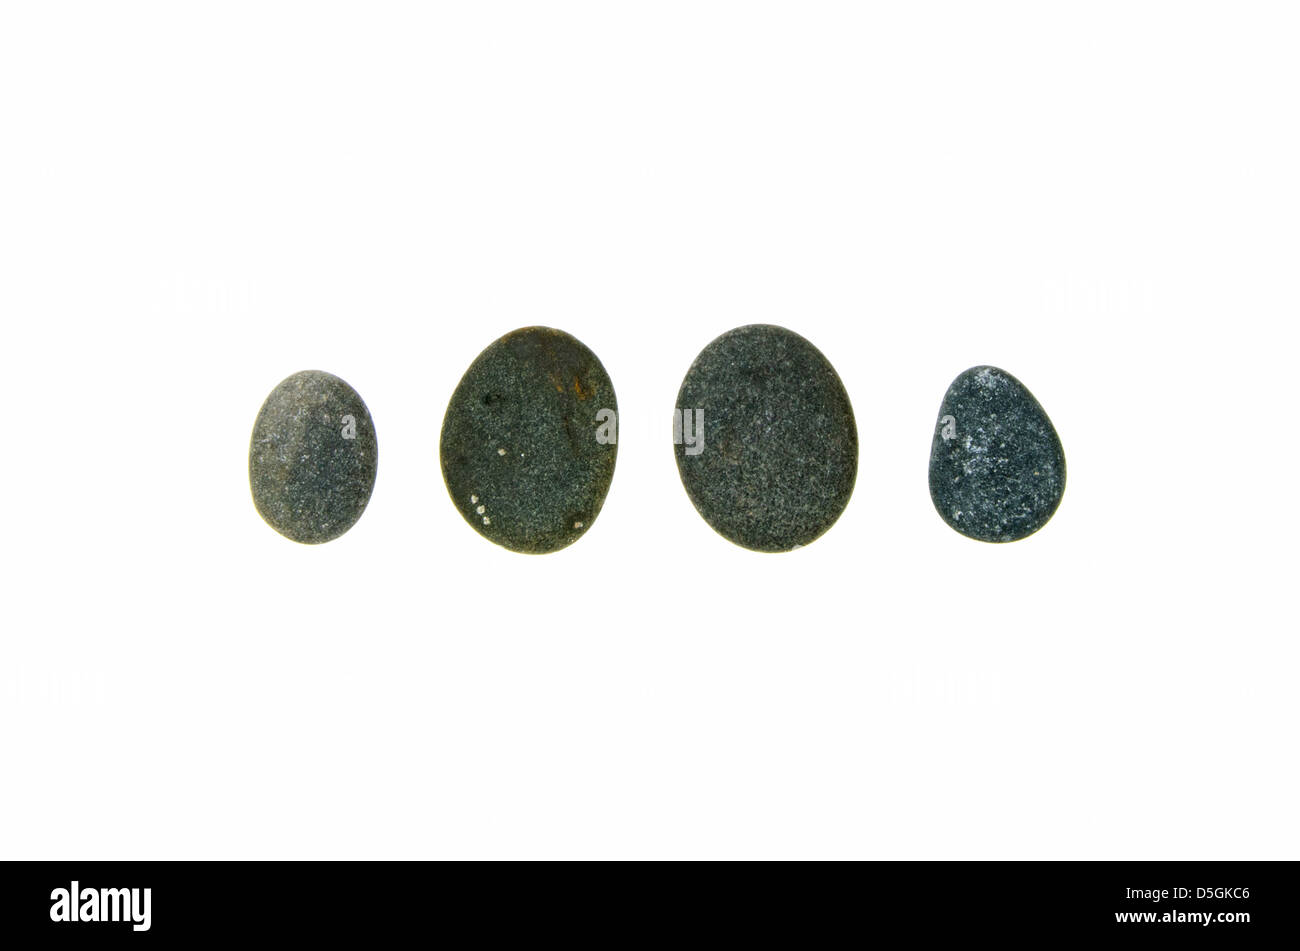 Four smooth, dark beach stones of Maine granite and schist. Stock Photo